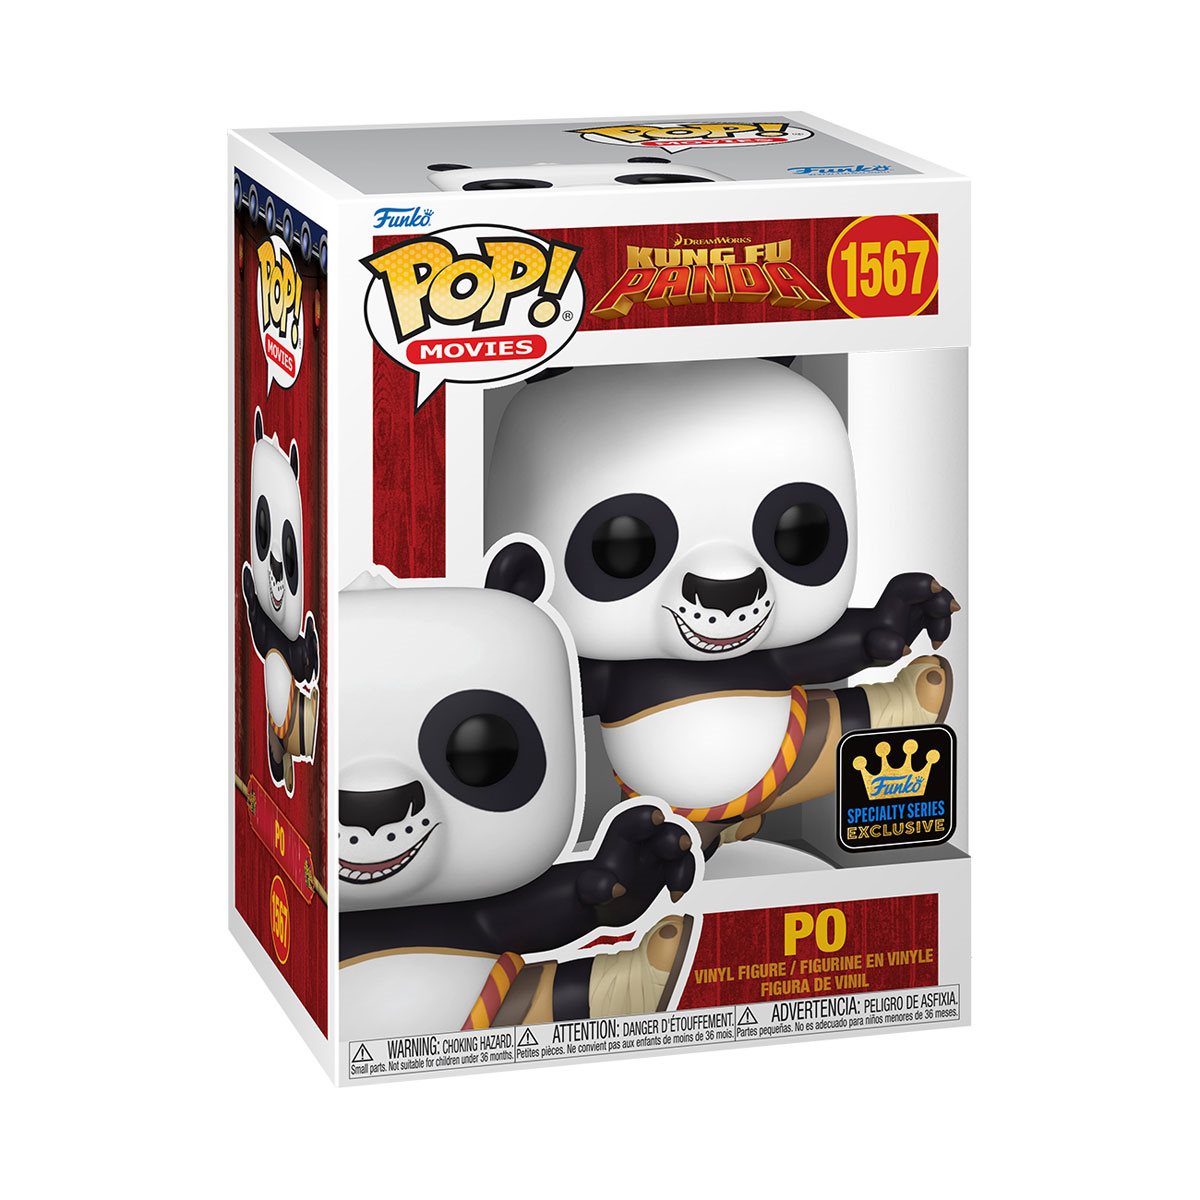 Funko Pop! Movies: Kung Fu Panda: Po (Specialty Series Exclusive)